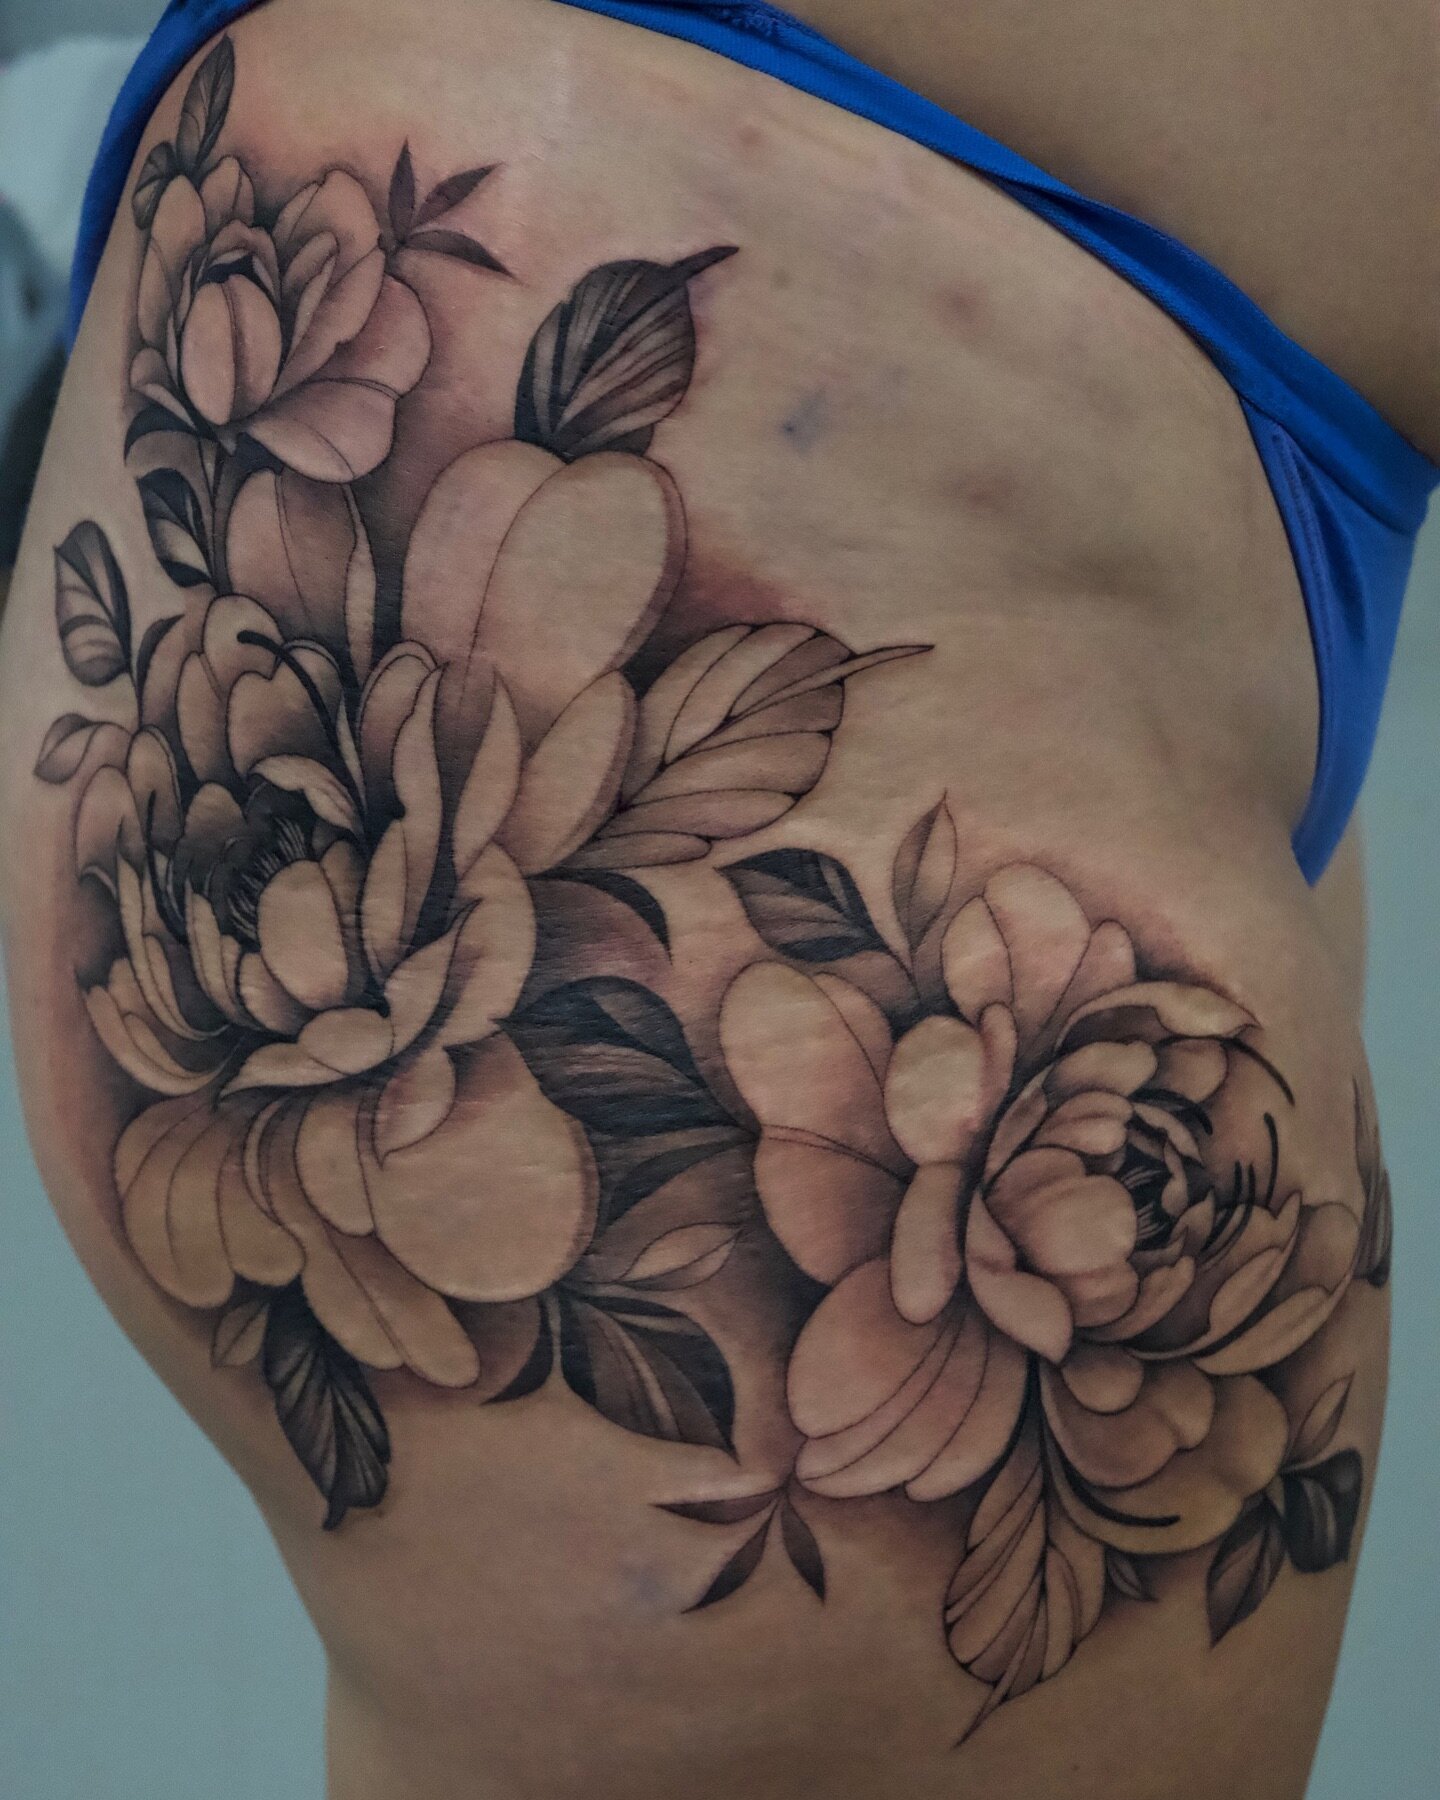 Flower hip tattoo done by @brandedredart 
So elegant and feminine🥰
Come get your next tattoo done by us, scheduling available thru our website✨
#mesaaz #mesa #tattooshop #aztattoo #tattooer #tattoos #kwadron #hustlebutter #safetattoo #art #bodytatto